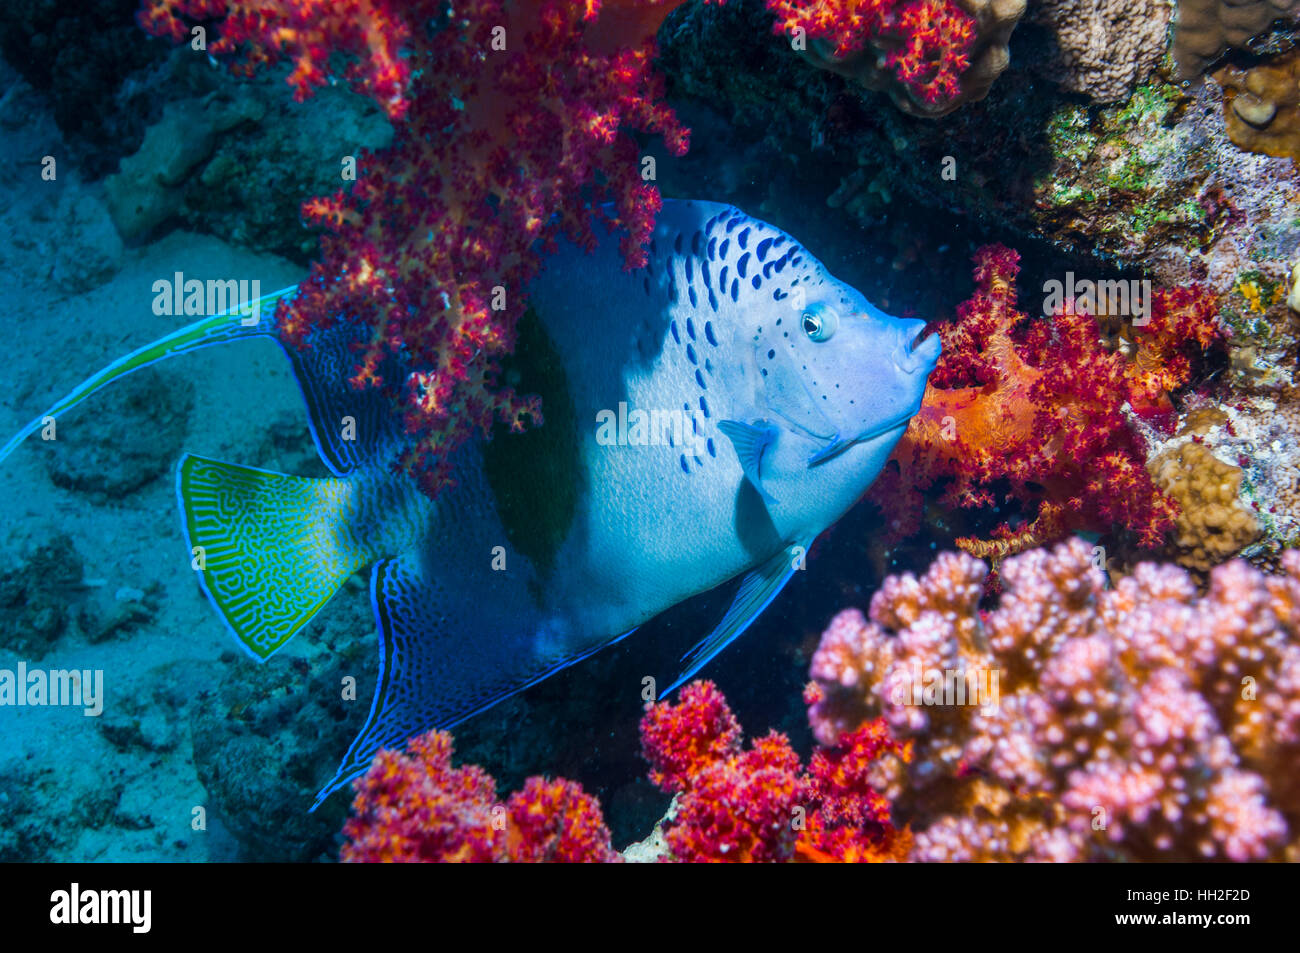 Yellowbar angelfish [Pomacanthus maculosus].  Egypt, Red Sea. Stock Photo